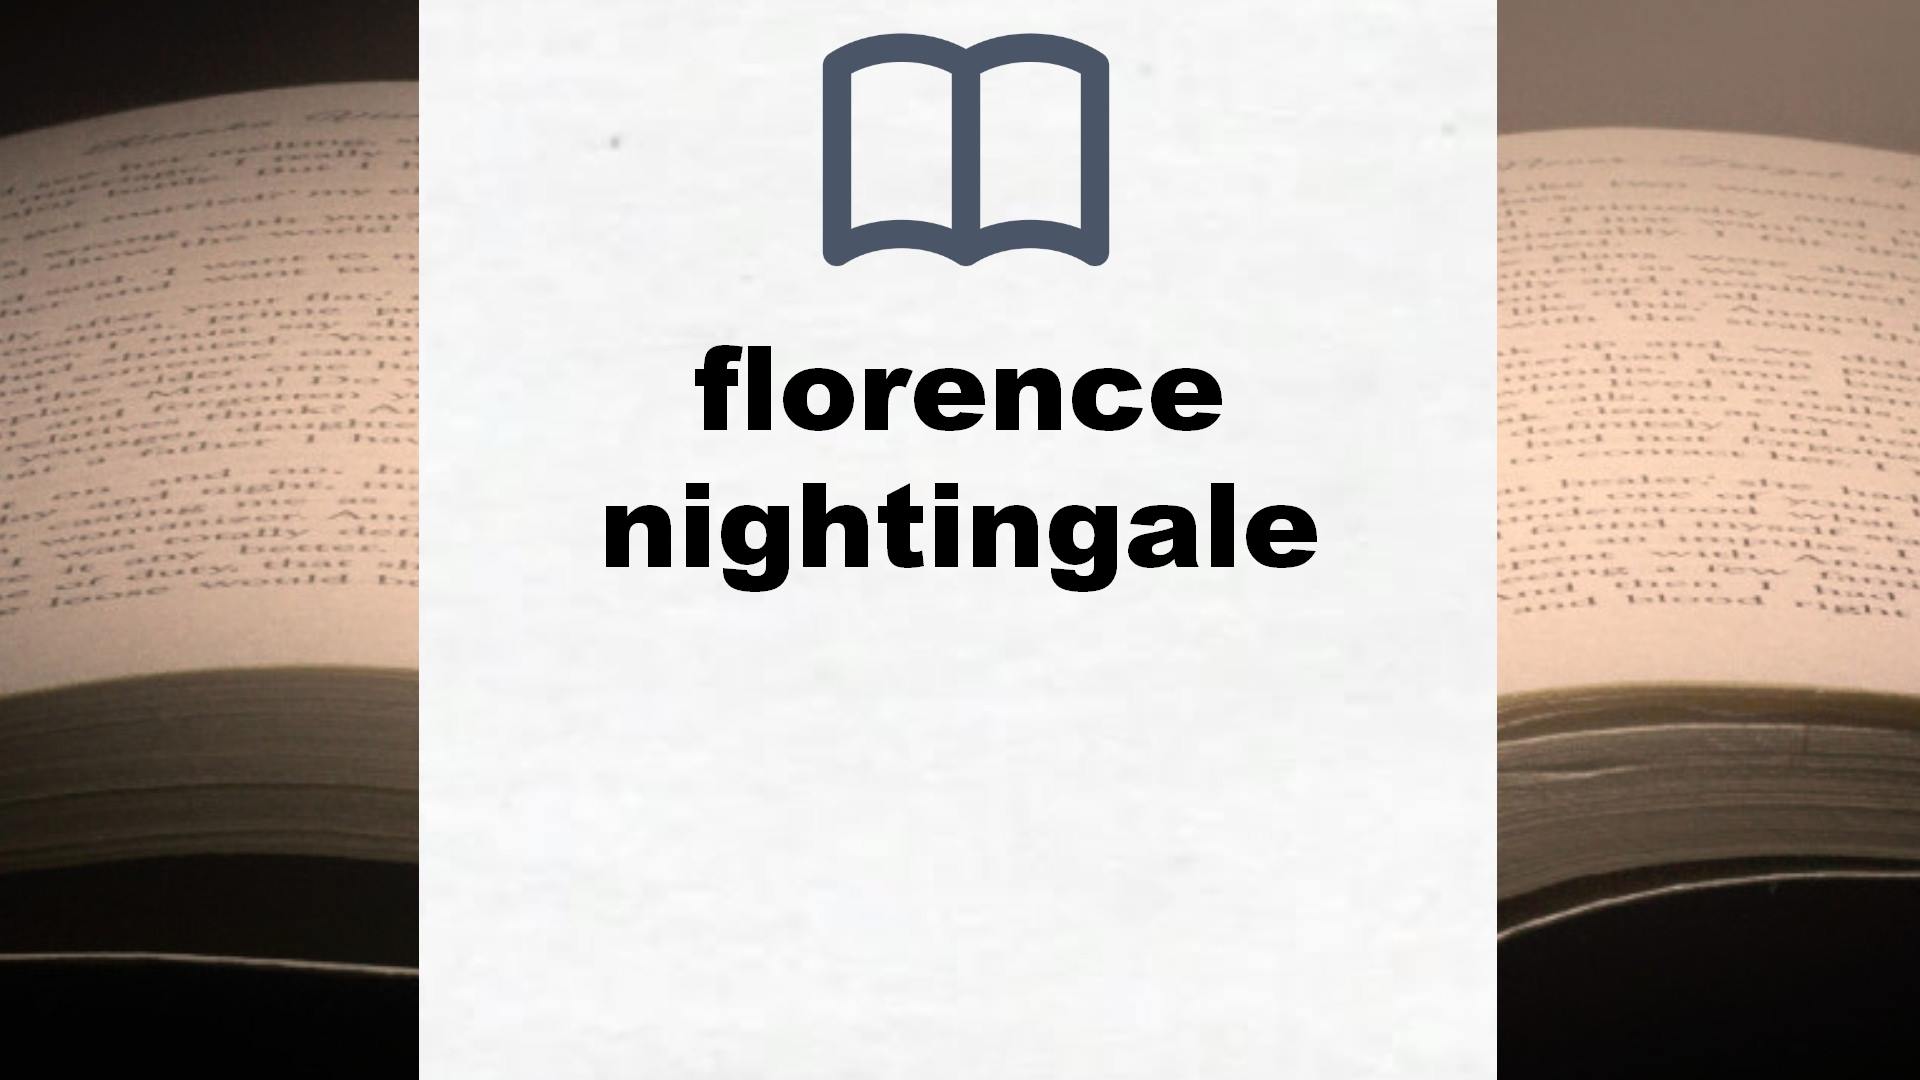 Libros sobre florence nightingale